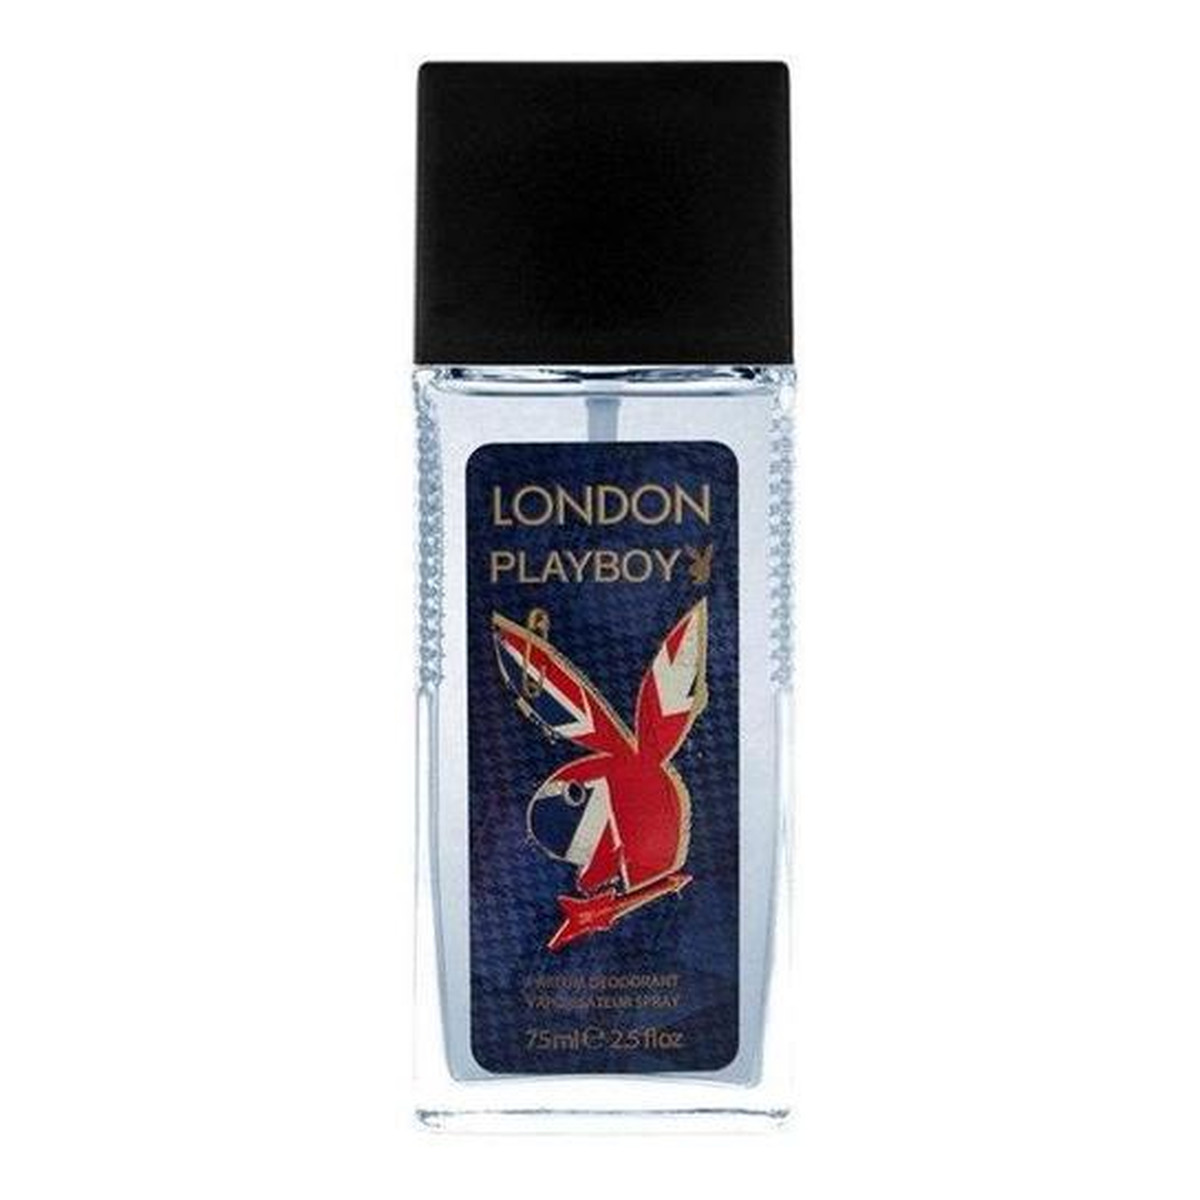 Playboy London Dezodorant Spray 75ml